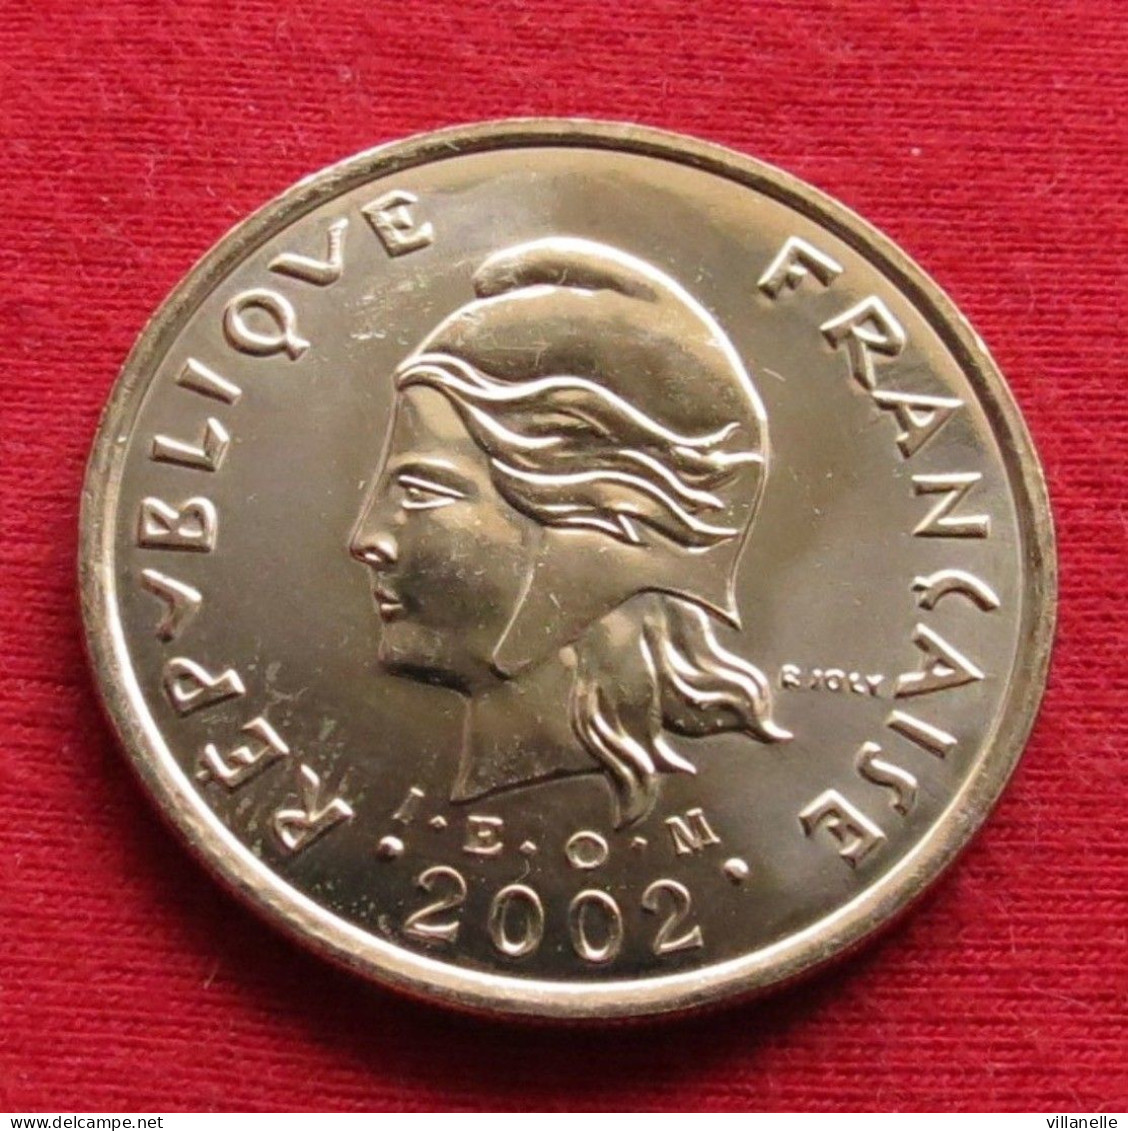 French Polynesia 100 Francs 2002 KM# 14 *VT Polynesie Polinesia - French Polynesia